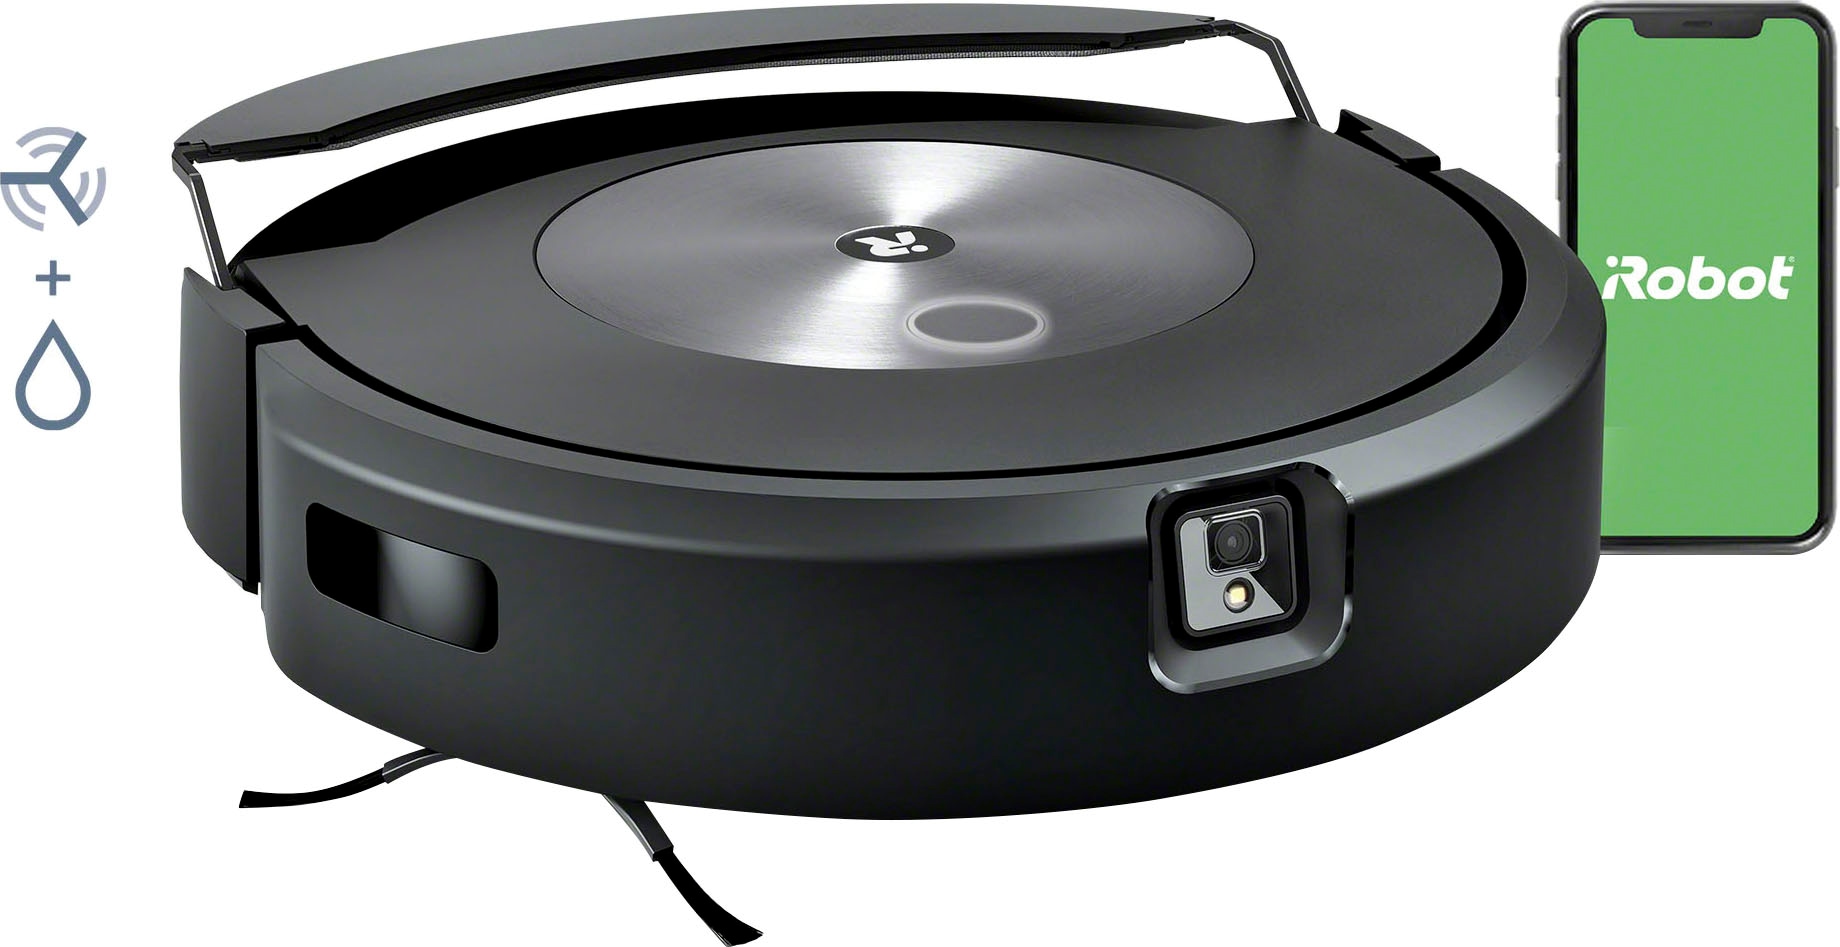 Combo Saugroboter Saug- »Roomba Wischroboter 3 (c715840)«, j7 XXL und mit Jahren iRobot Garantie